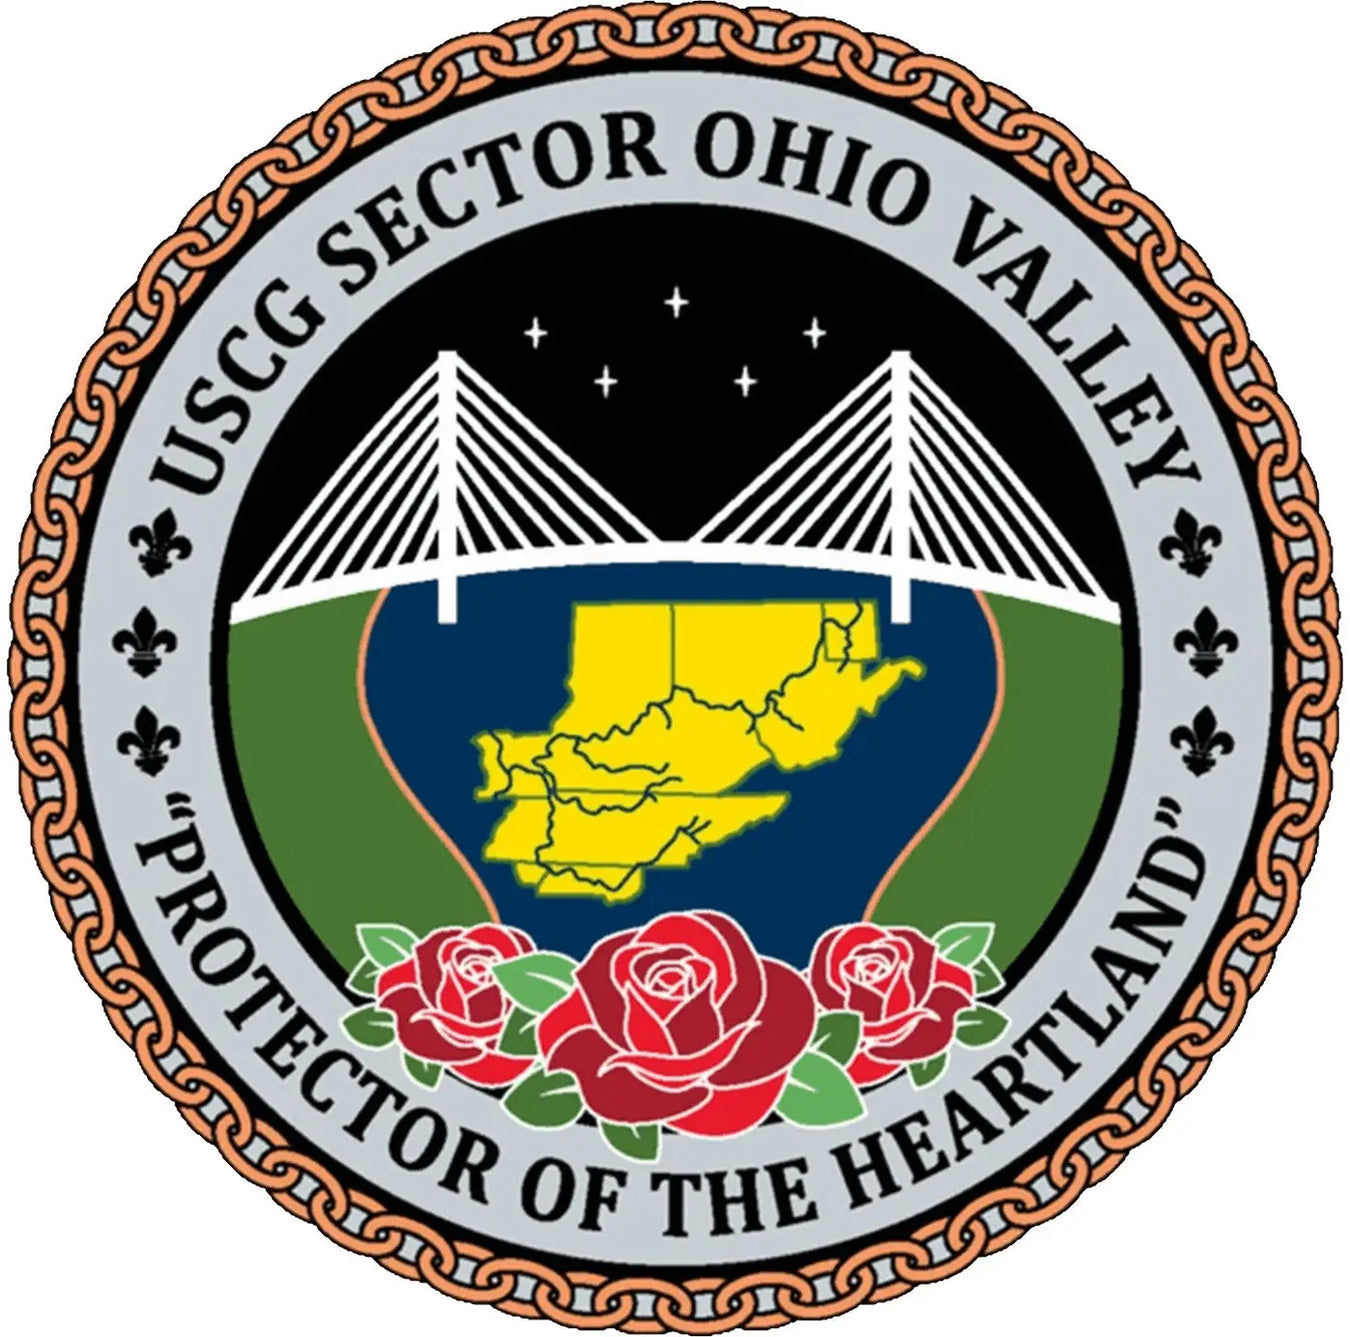 Sector Ohio Valley